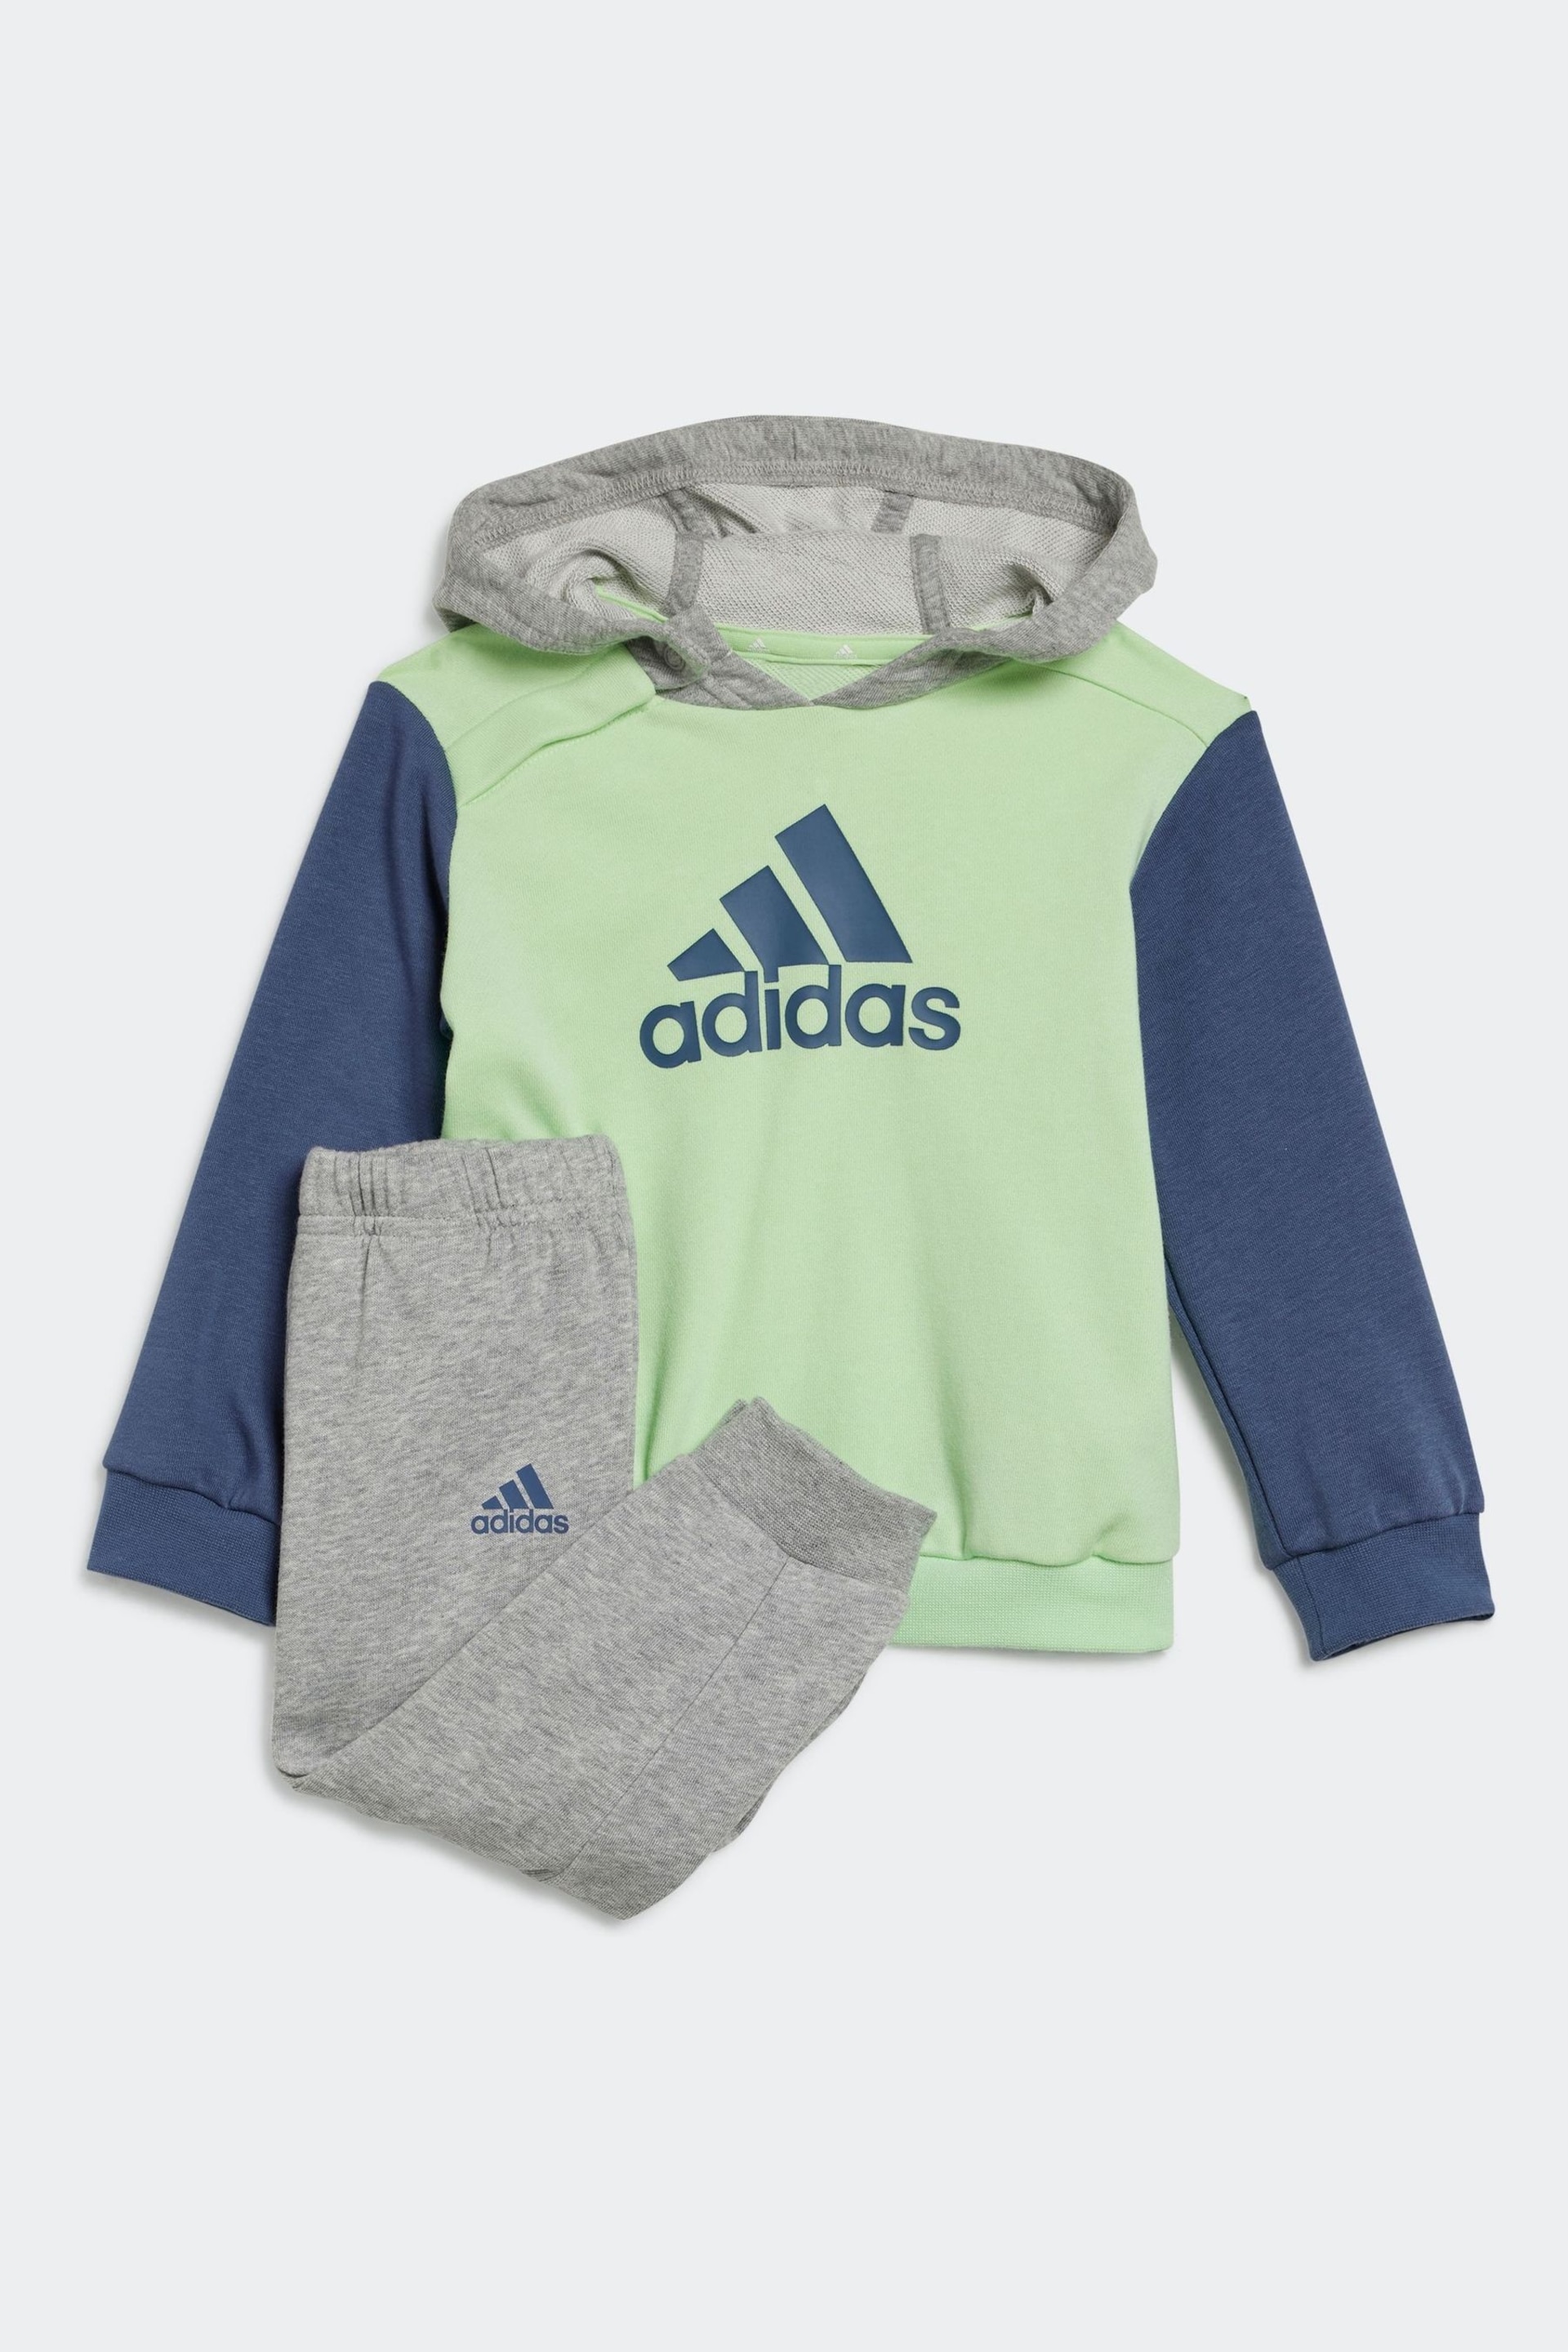 adidas Green/Grey Essentials Colorblock Jogger Set Kids - Image 1 of 6